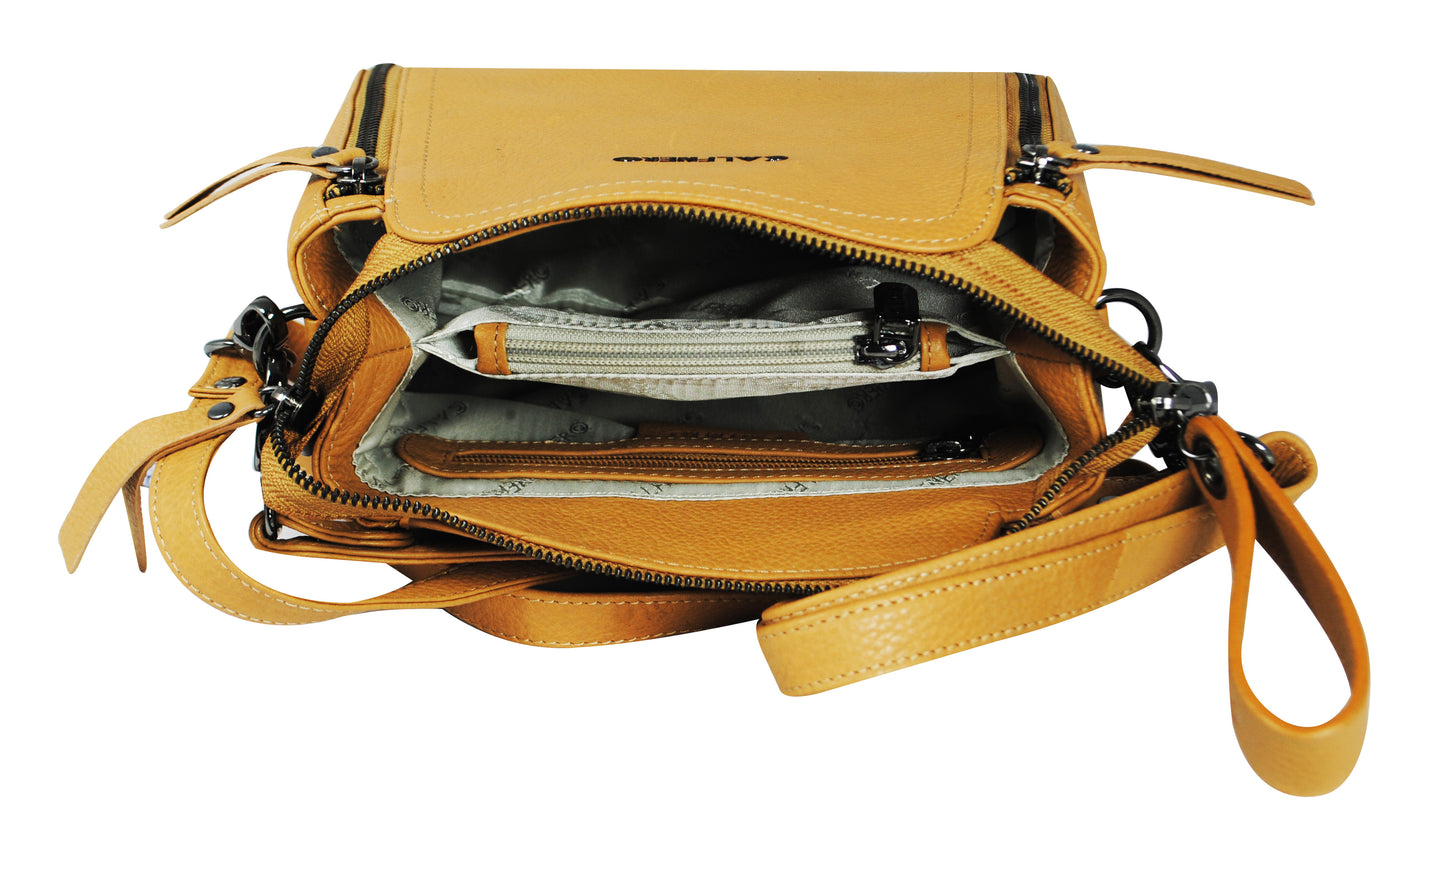 Calfnero Women's Genuine Leather Hand Bag (3044-Camel)